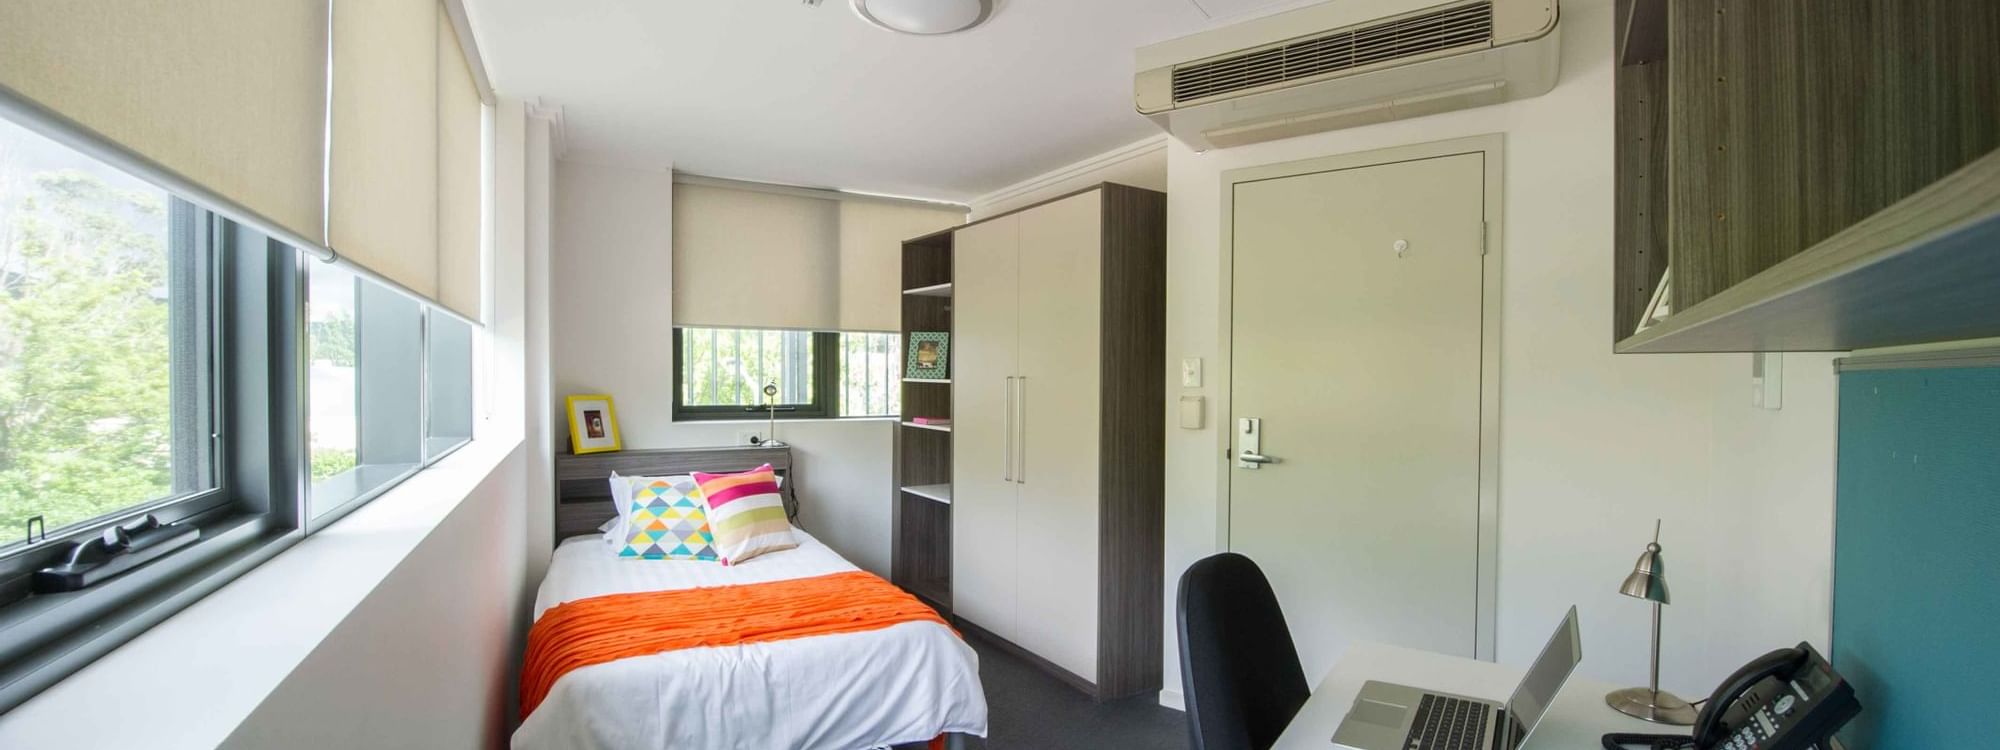 UniLodge @ ANU Warrambul Lodge 6 Bedroom Apartment